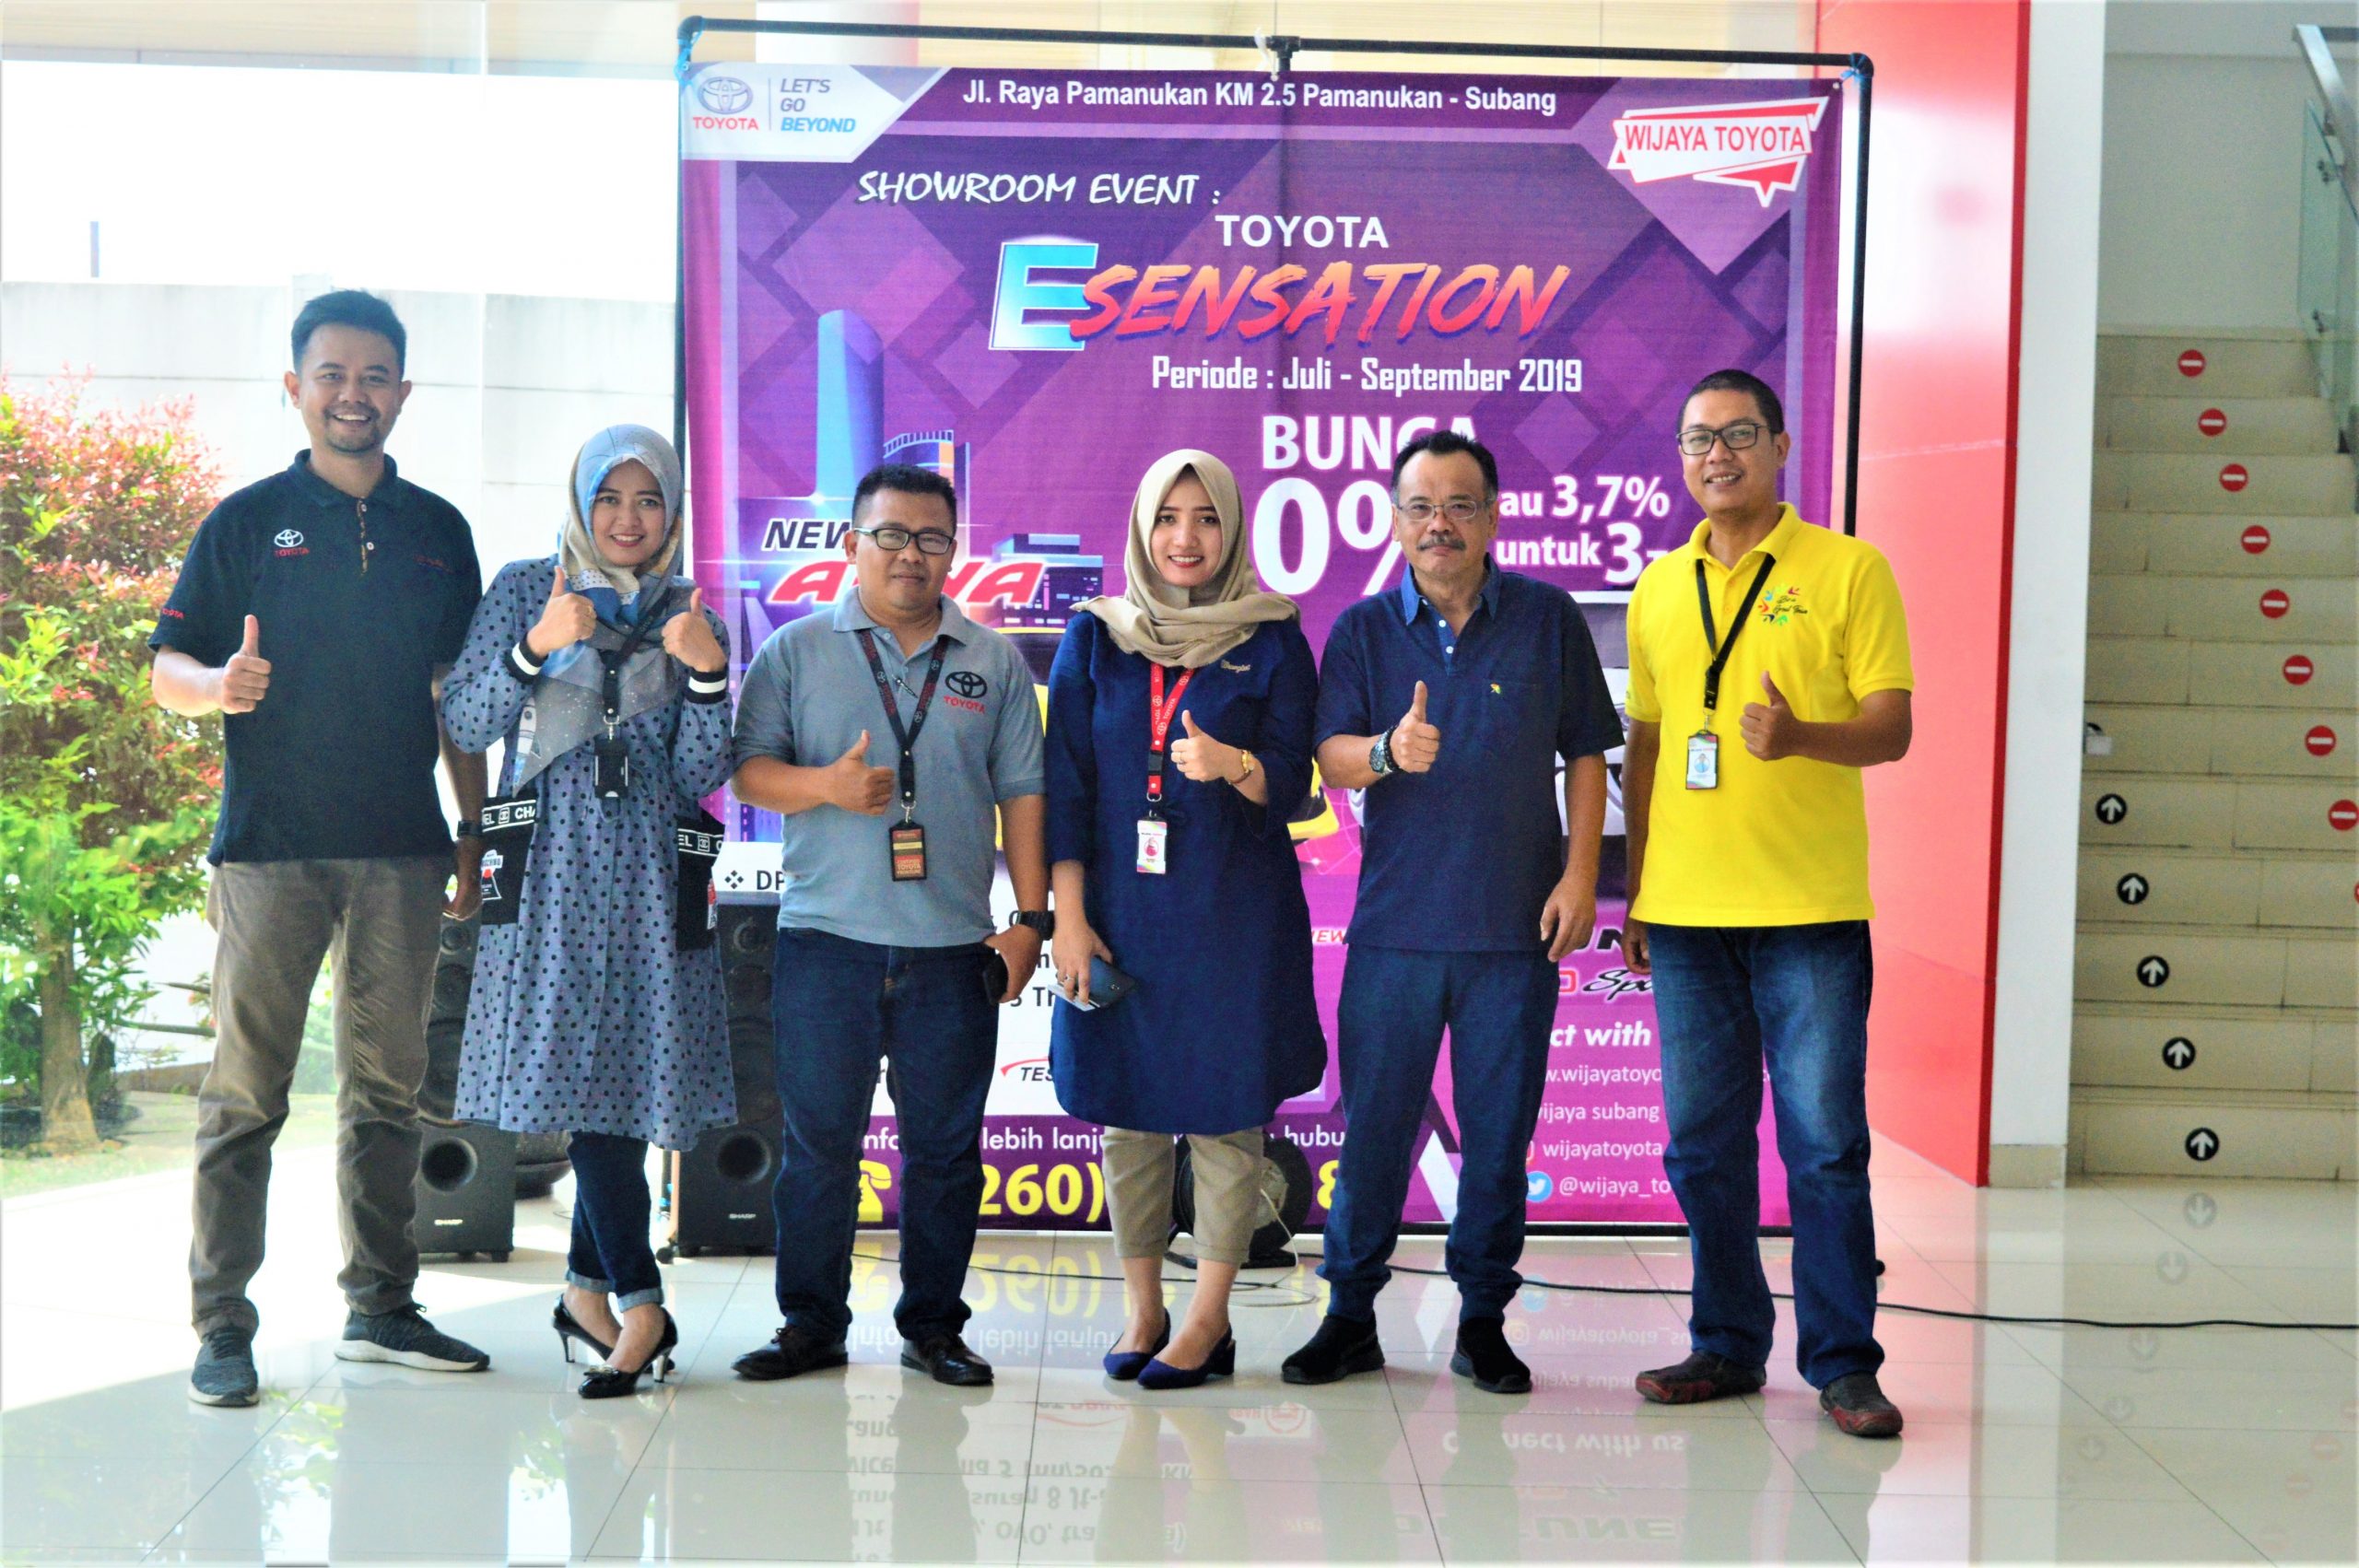 Showroom Event, Wijaya Toyota Kenalkan E Sensastion